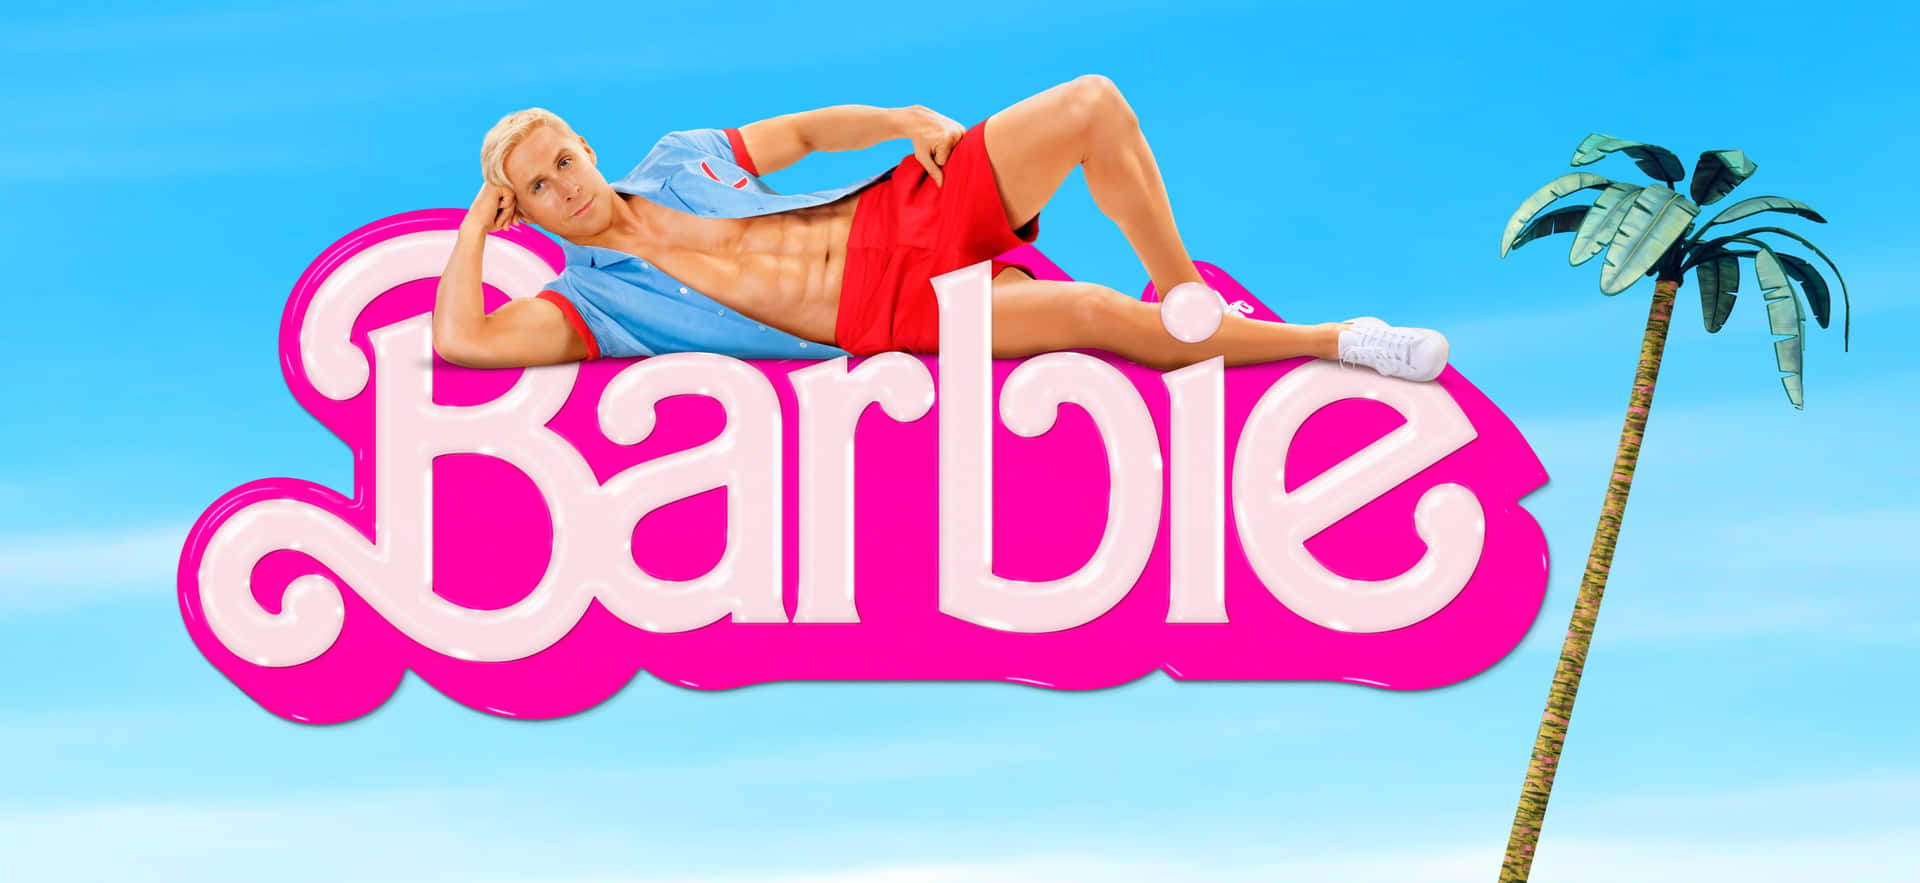 Barbie Movie Promotional Image Wallpaper